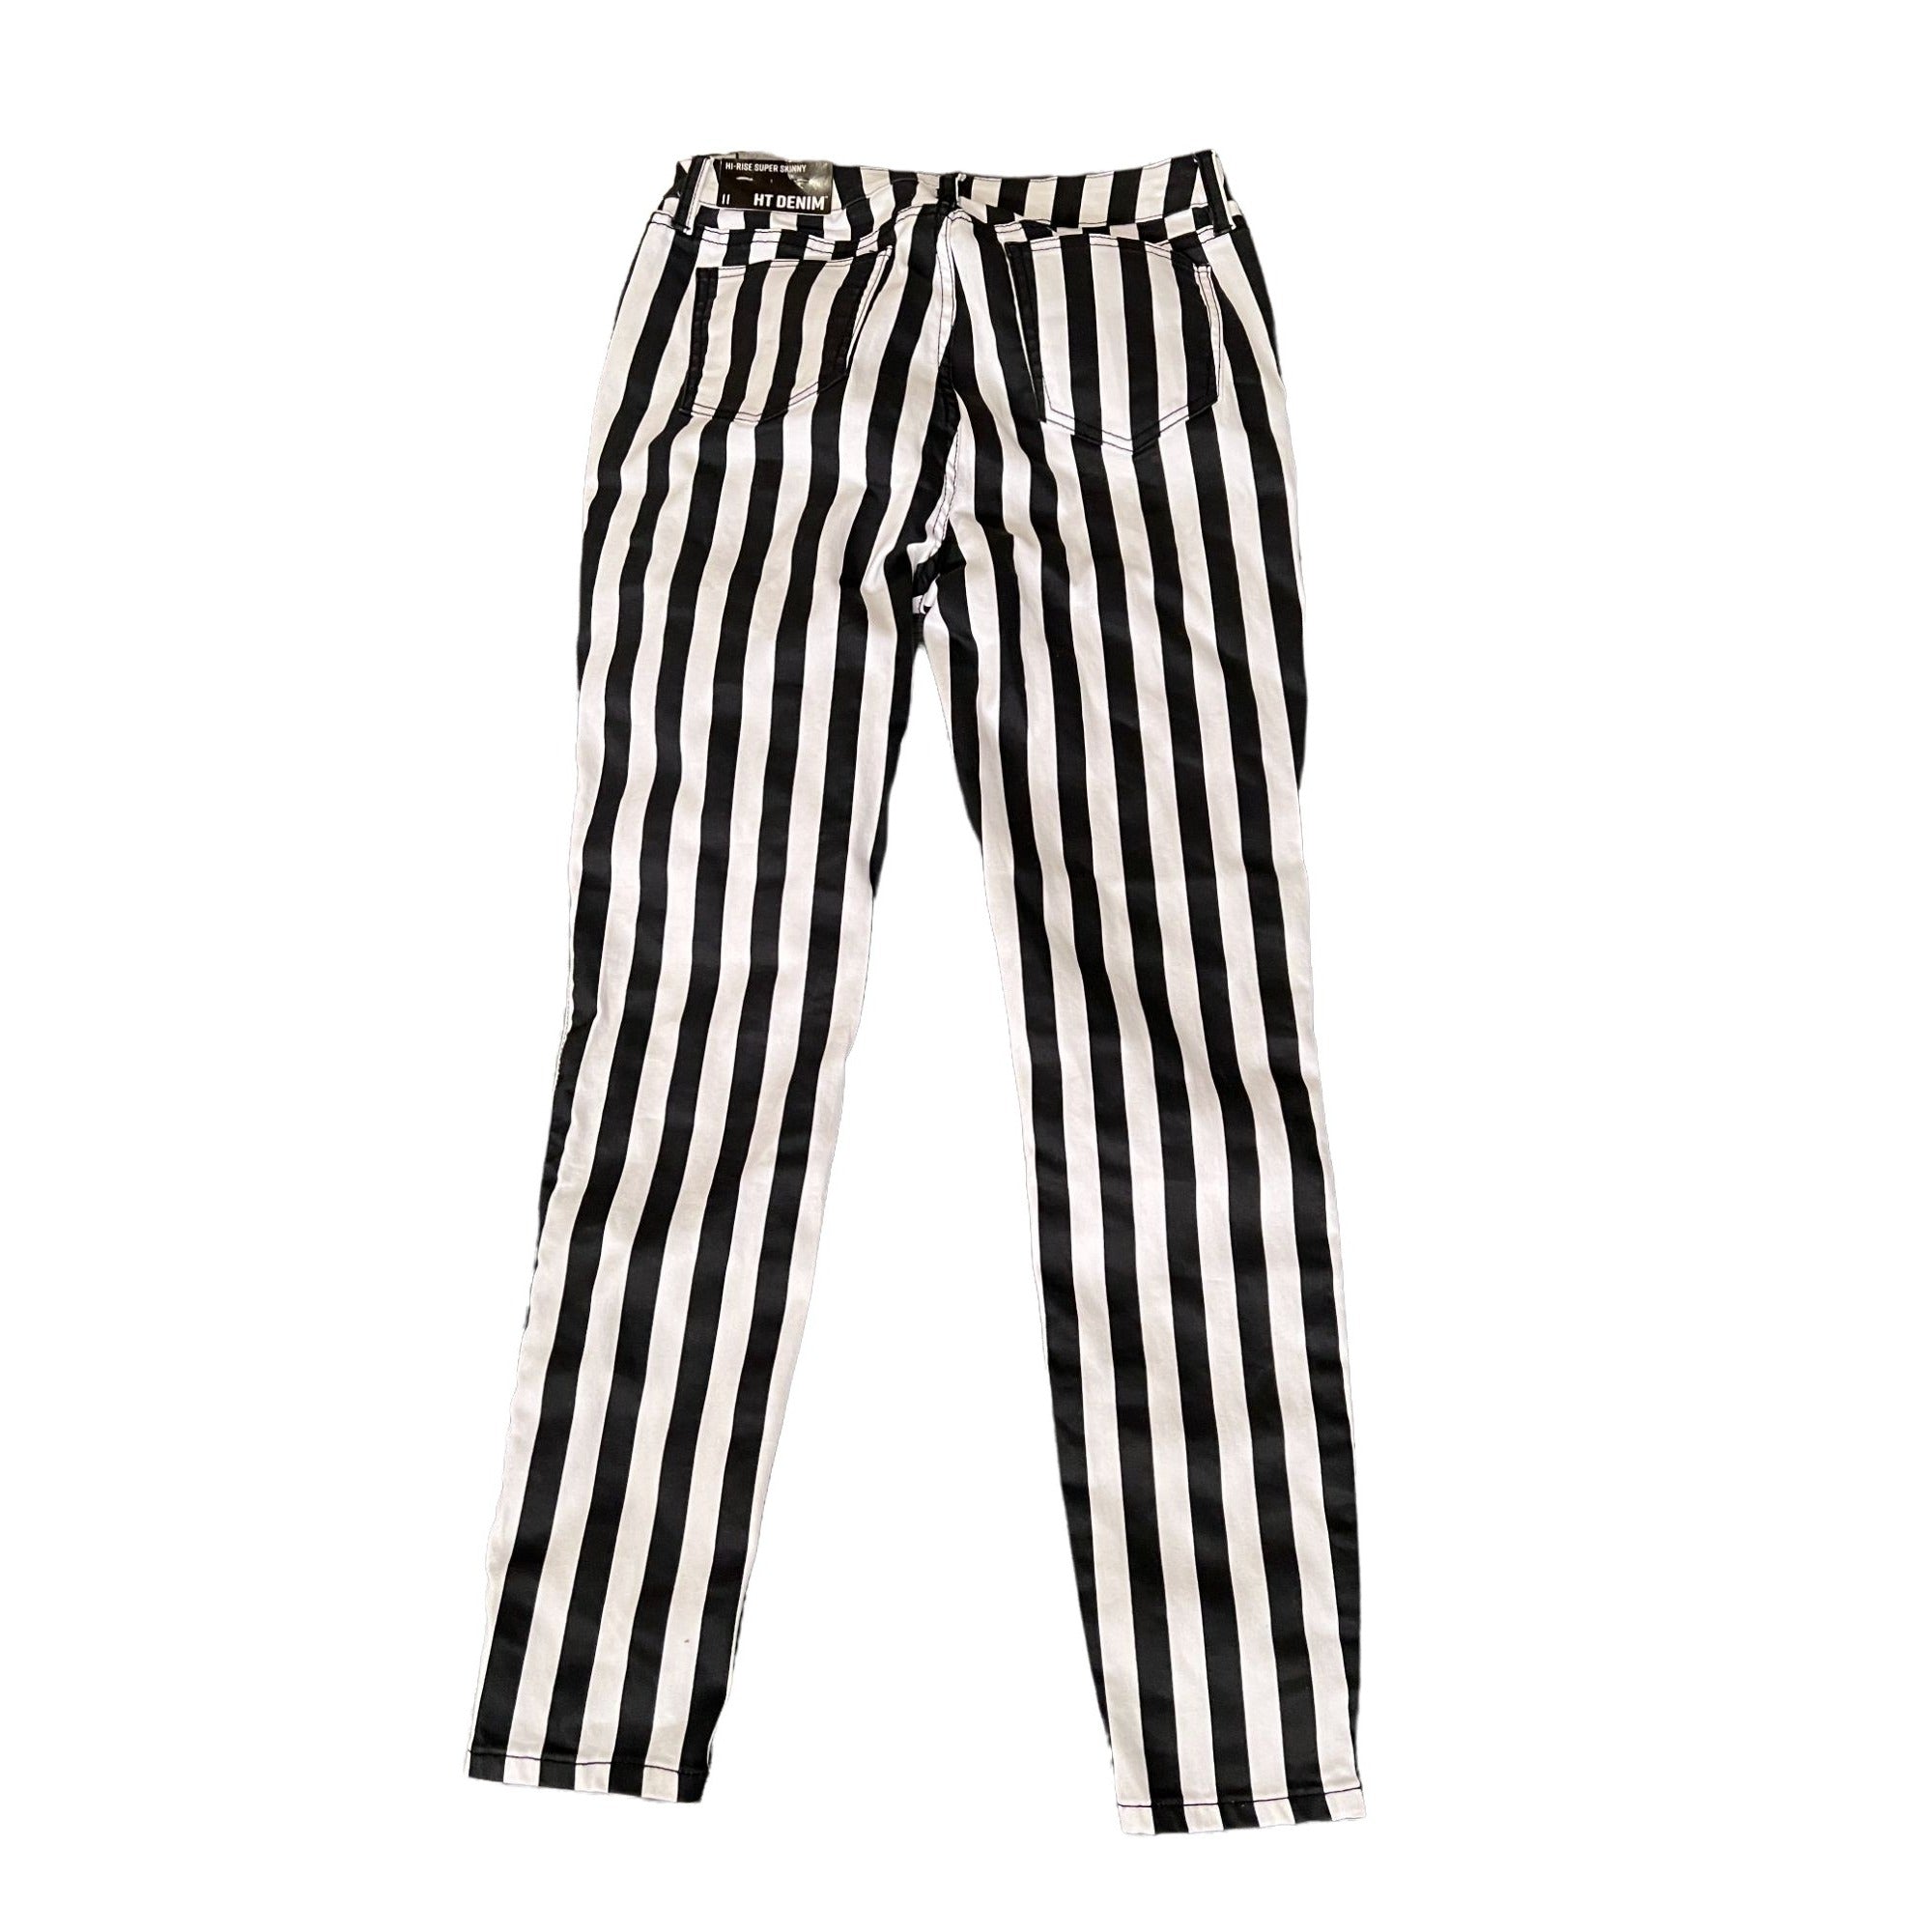 Black & Striped Jeans - 9/10 – Brand